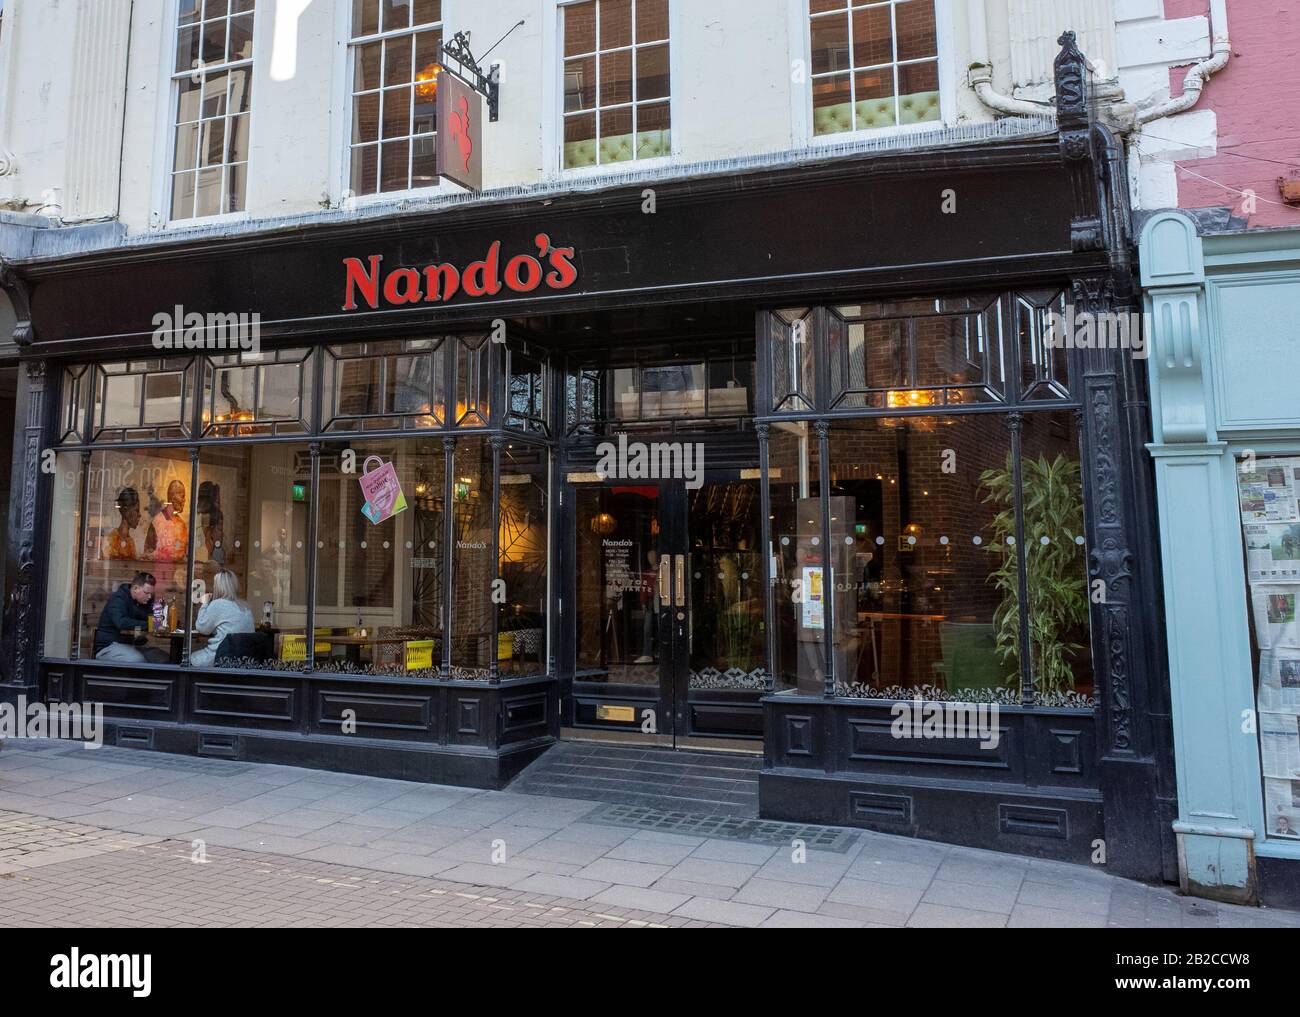 Nando's on a York High Street Stock Photo